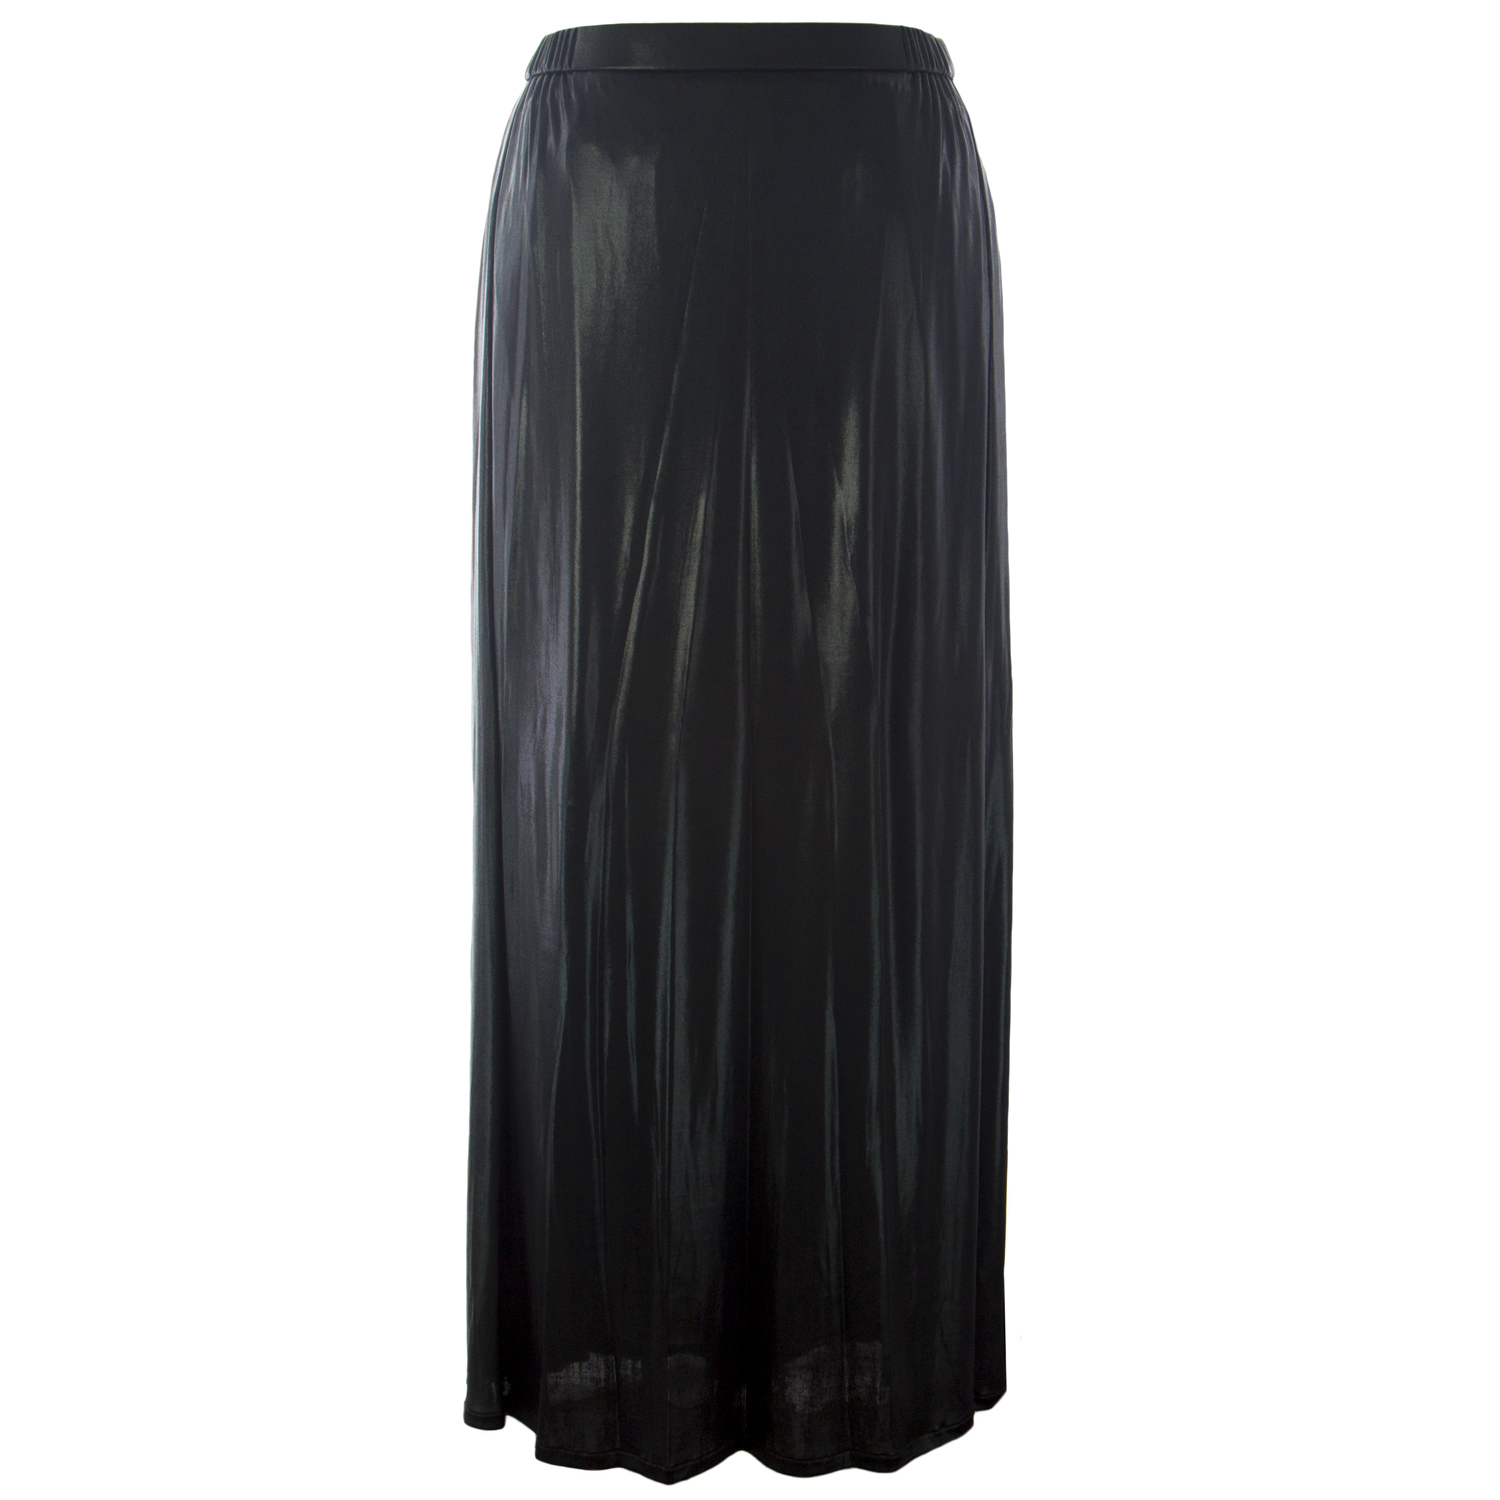 MARINA RINALDI Women's Online Shiny Stretch Maxi Skirt $460 NWT | eBay